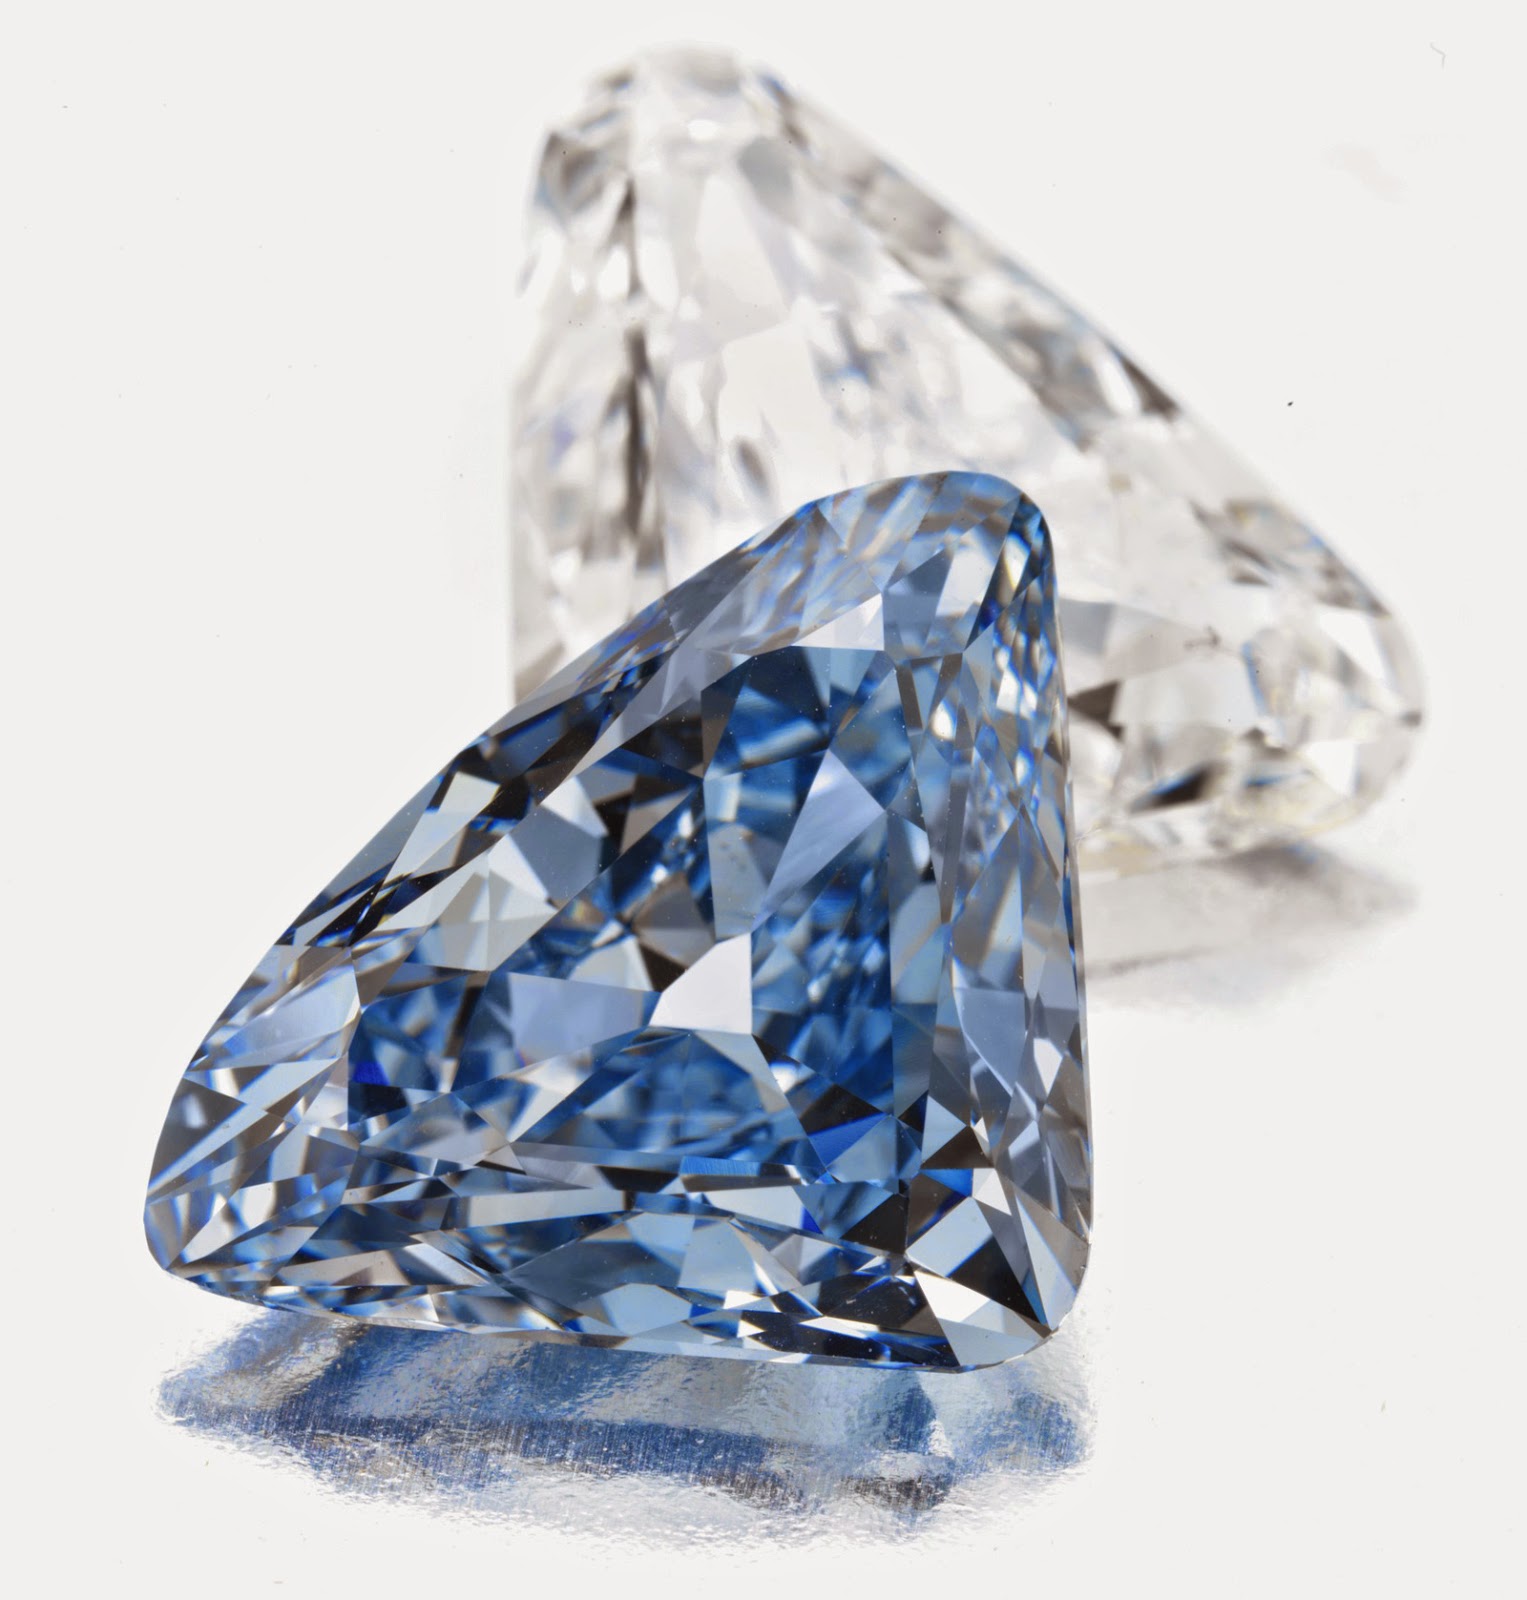 the bulgari blue diamond ring